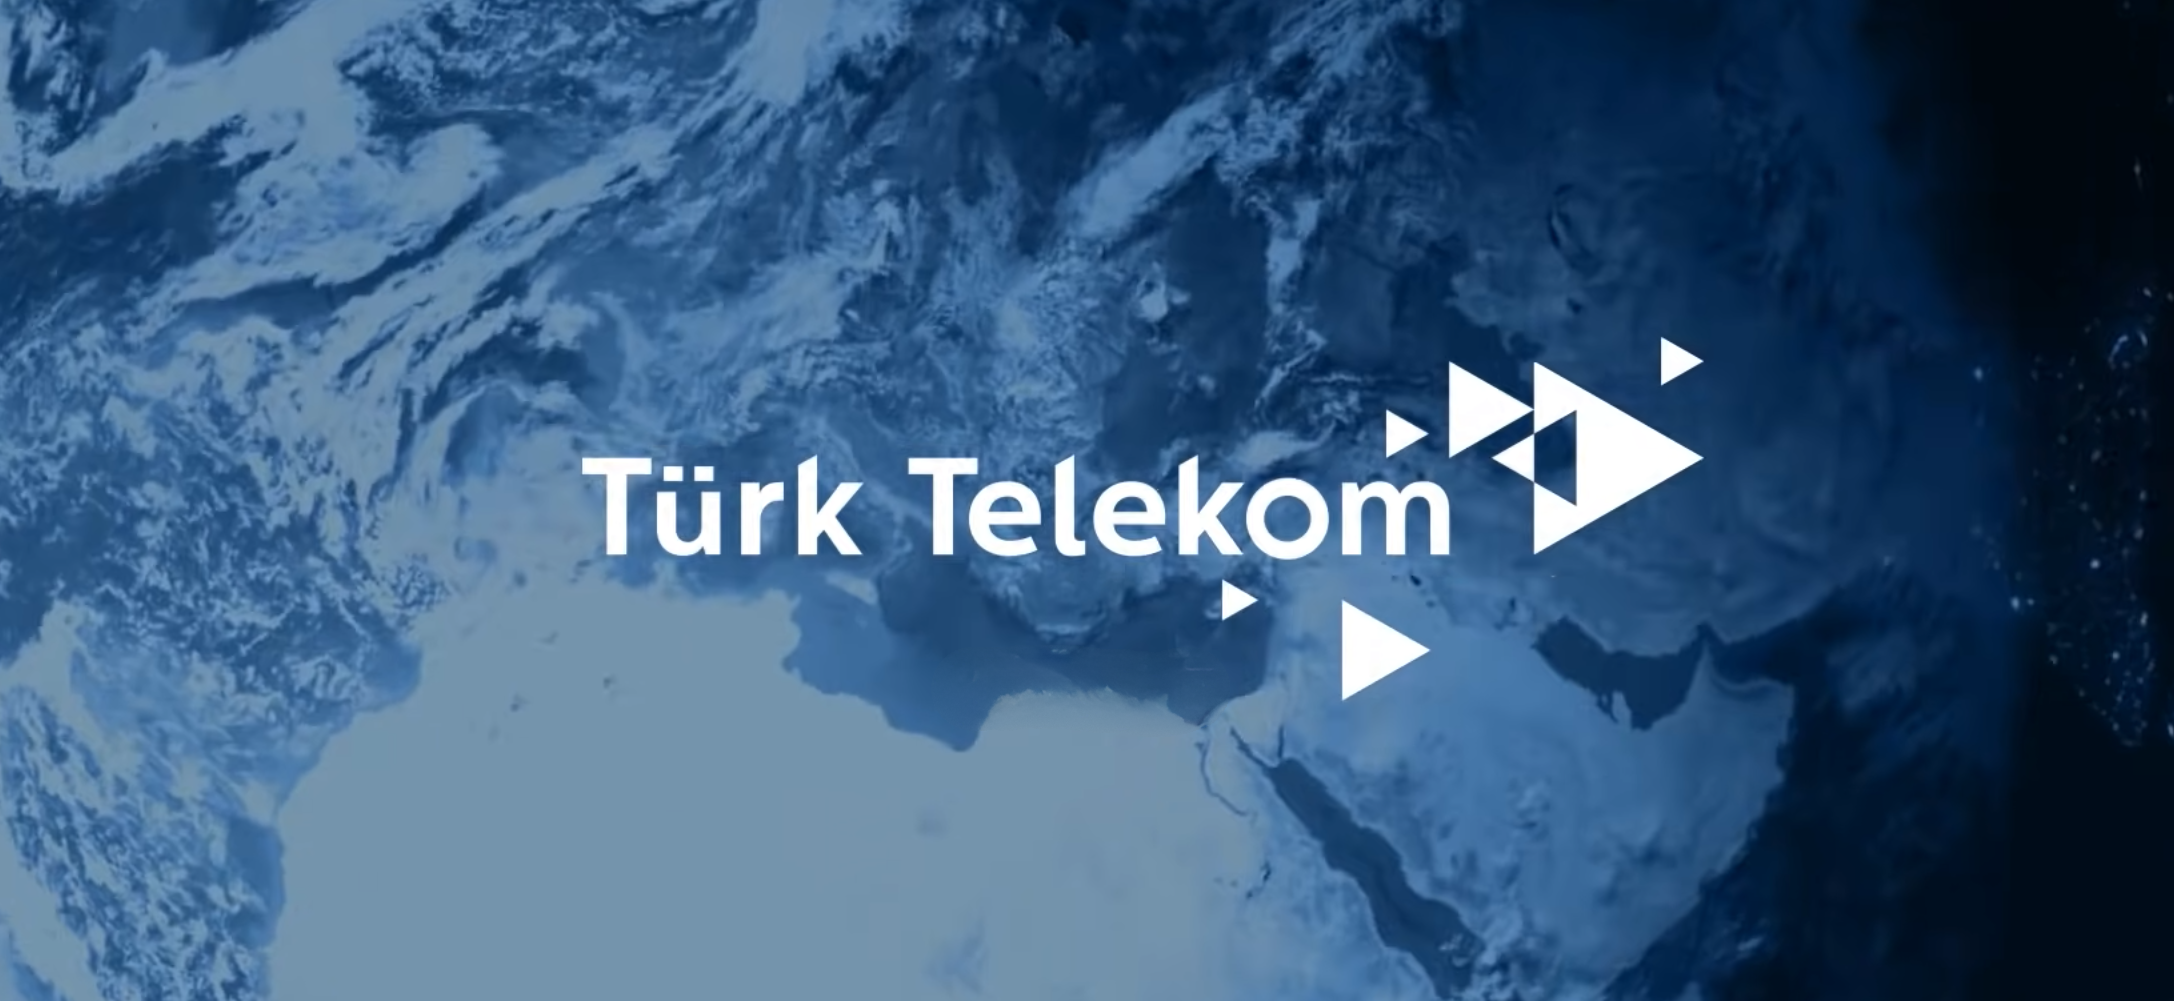 The Türk Telekom logo above an illustration of a network graph